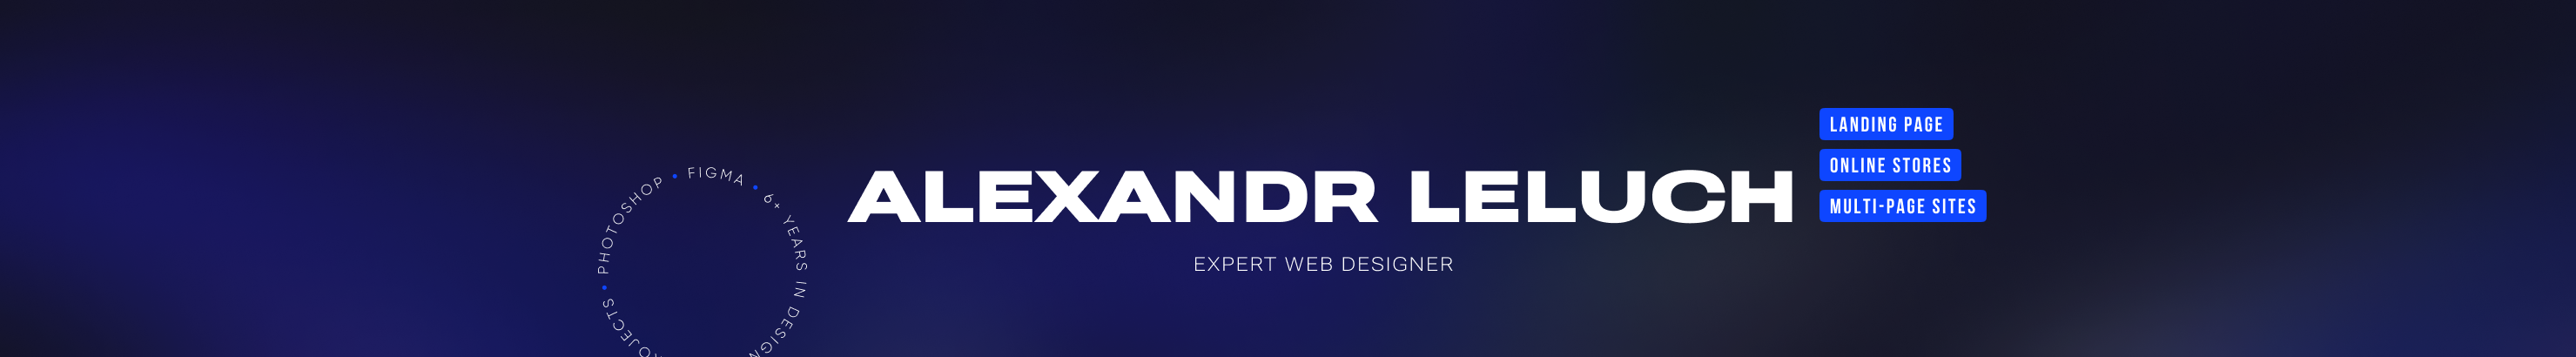 Alexandr Leluch's profile banner